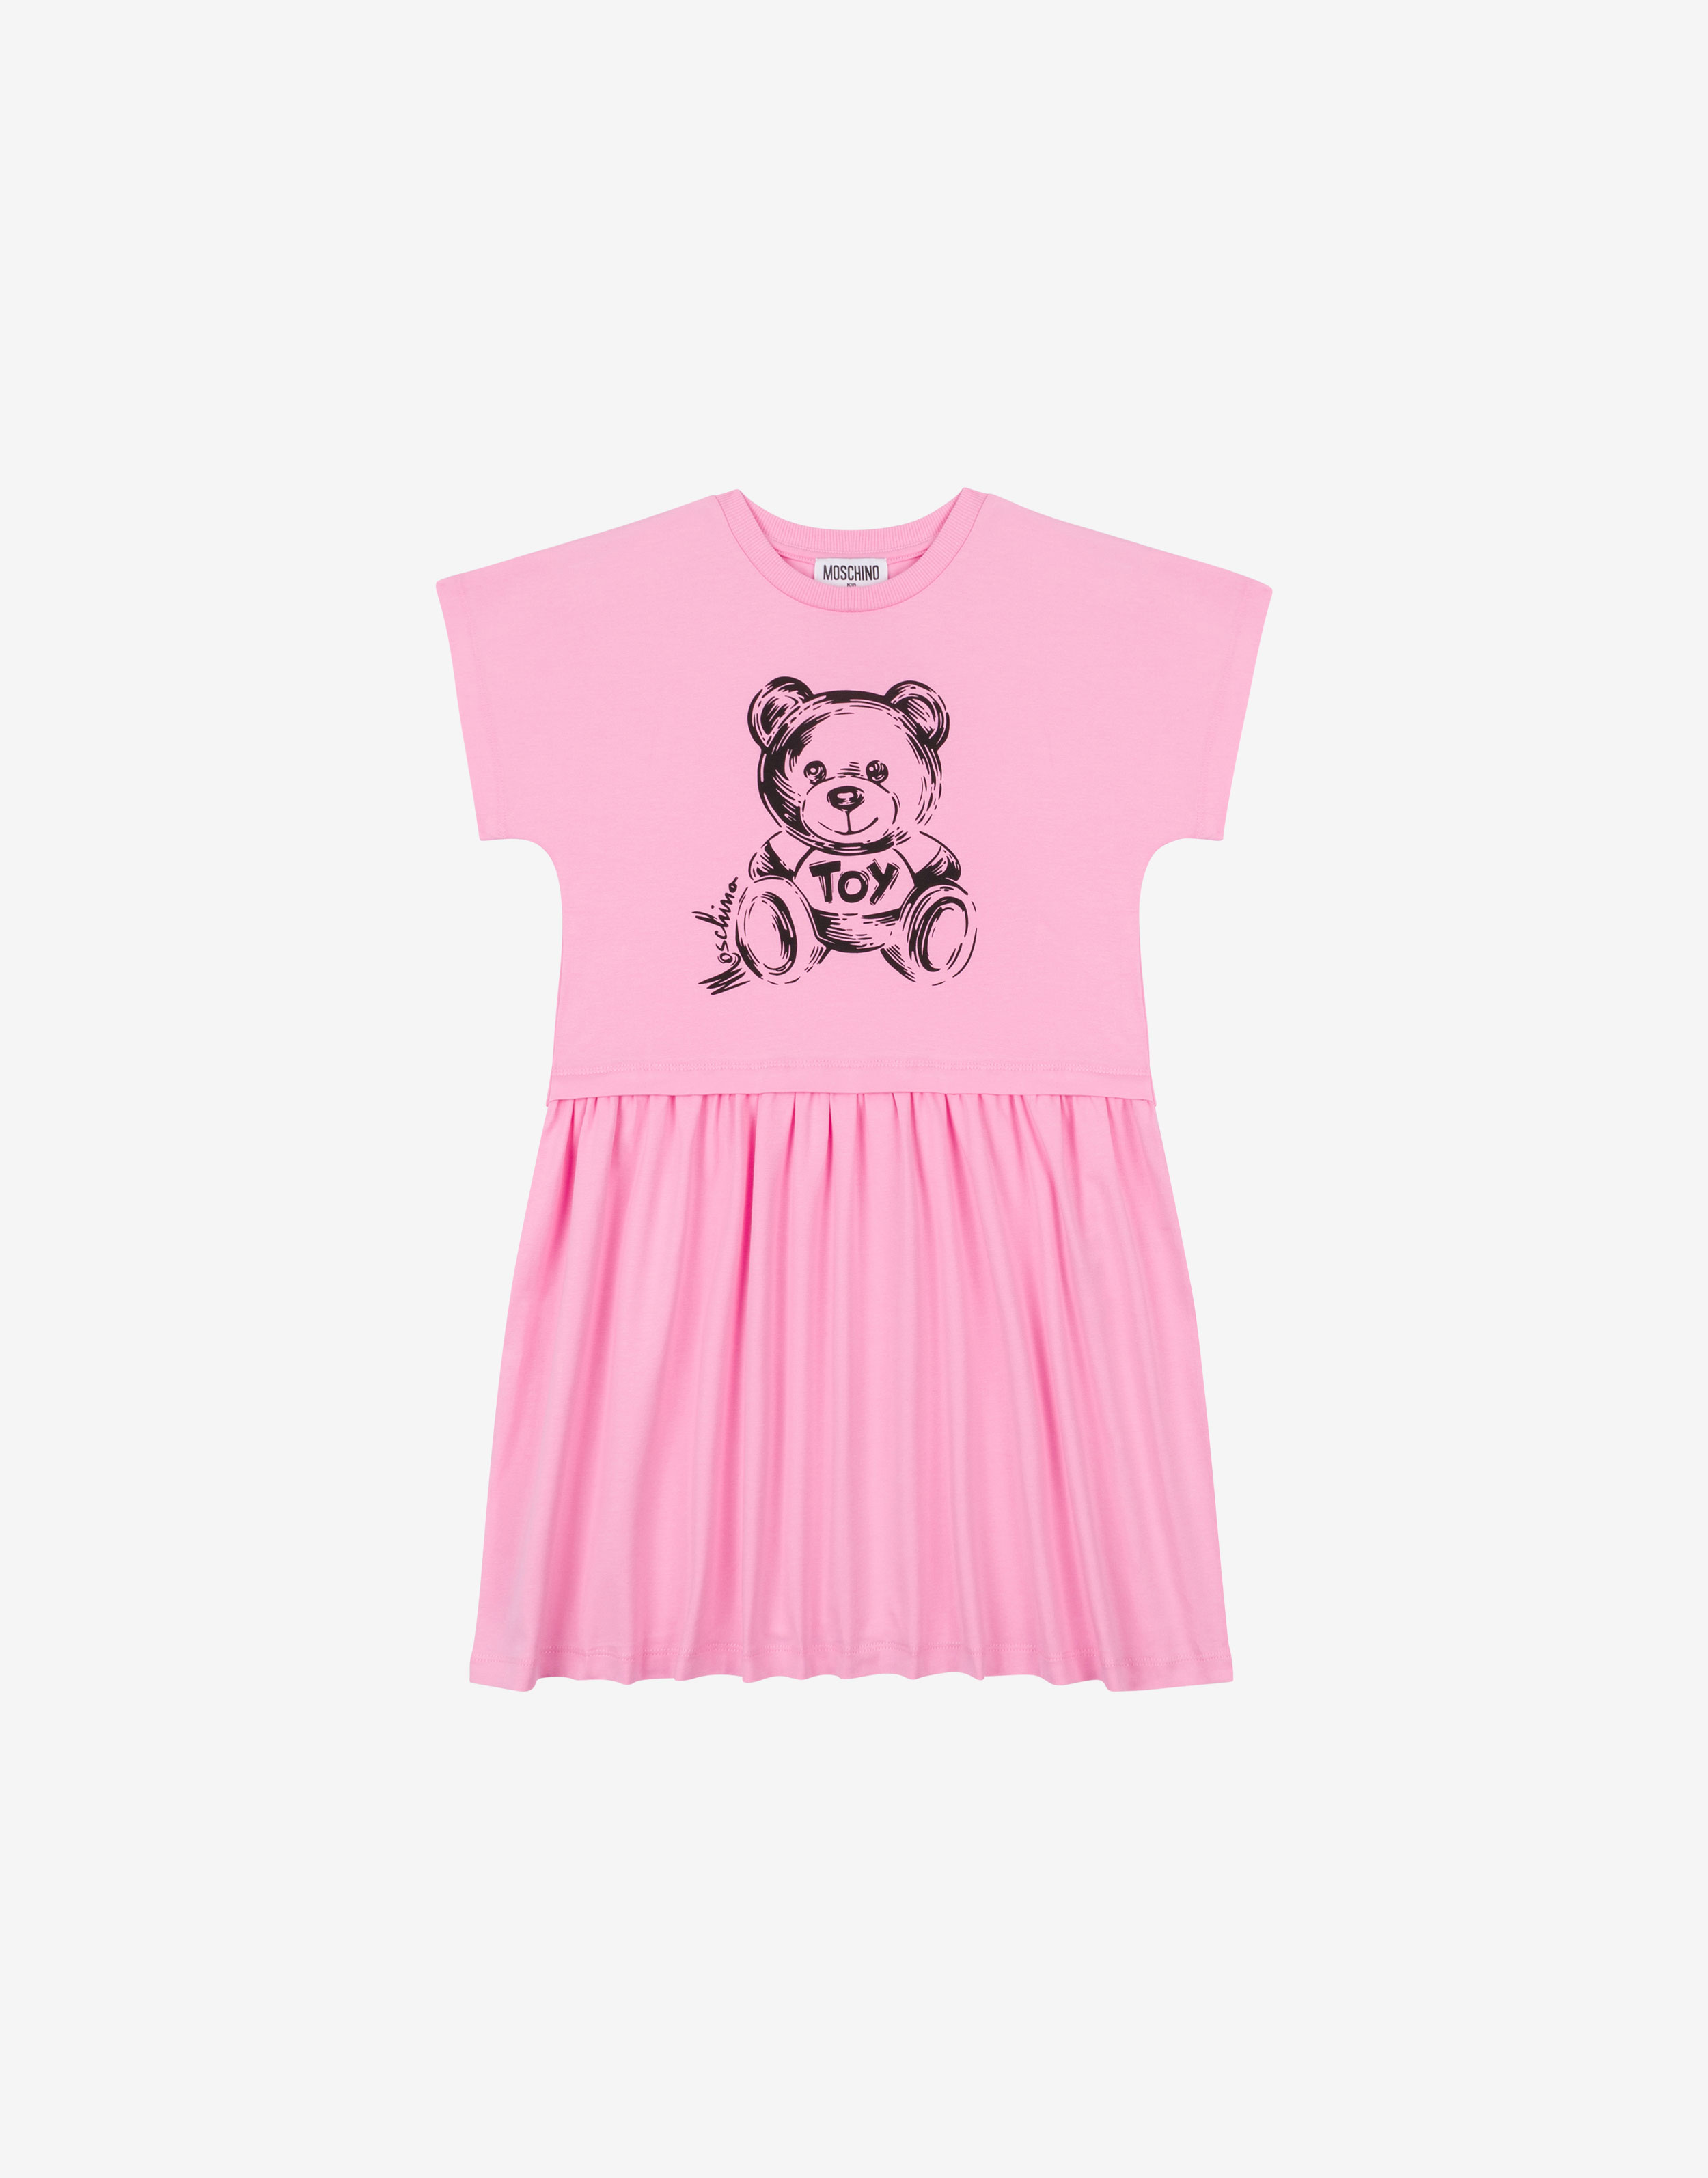 Mens Moschino pink Teddy Bear T-Shirt